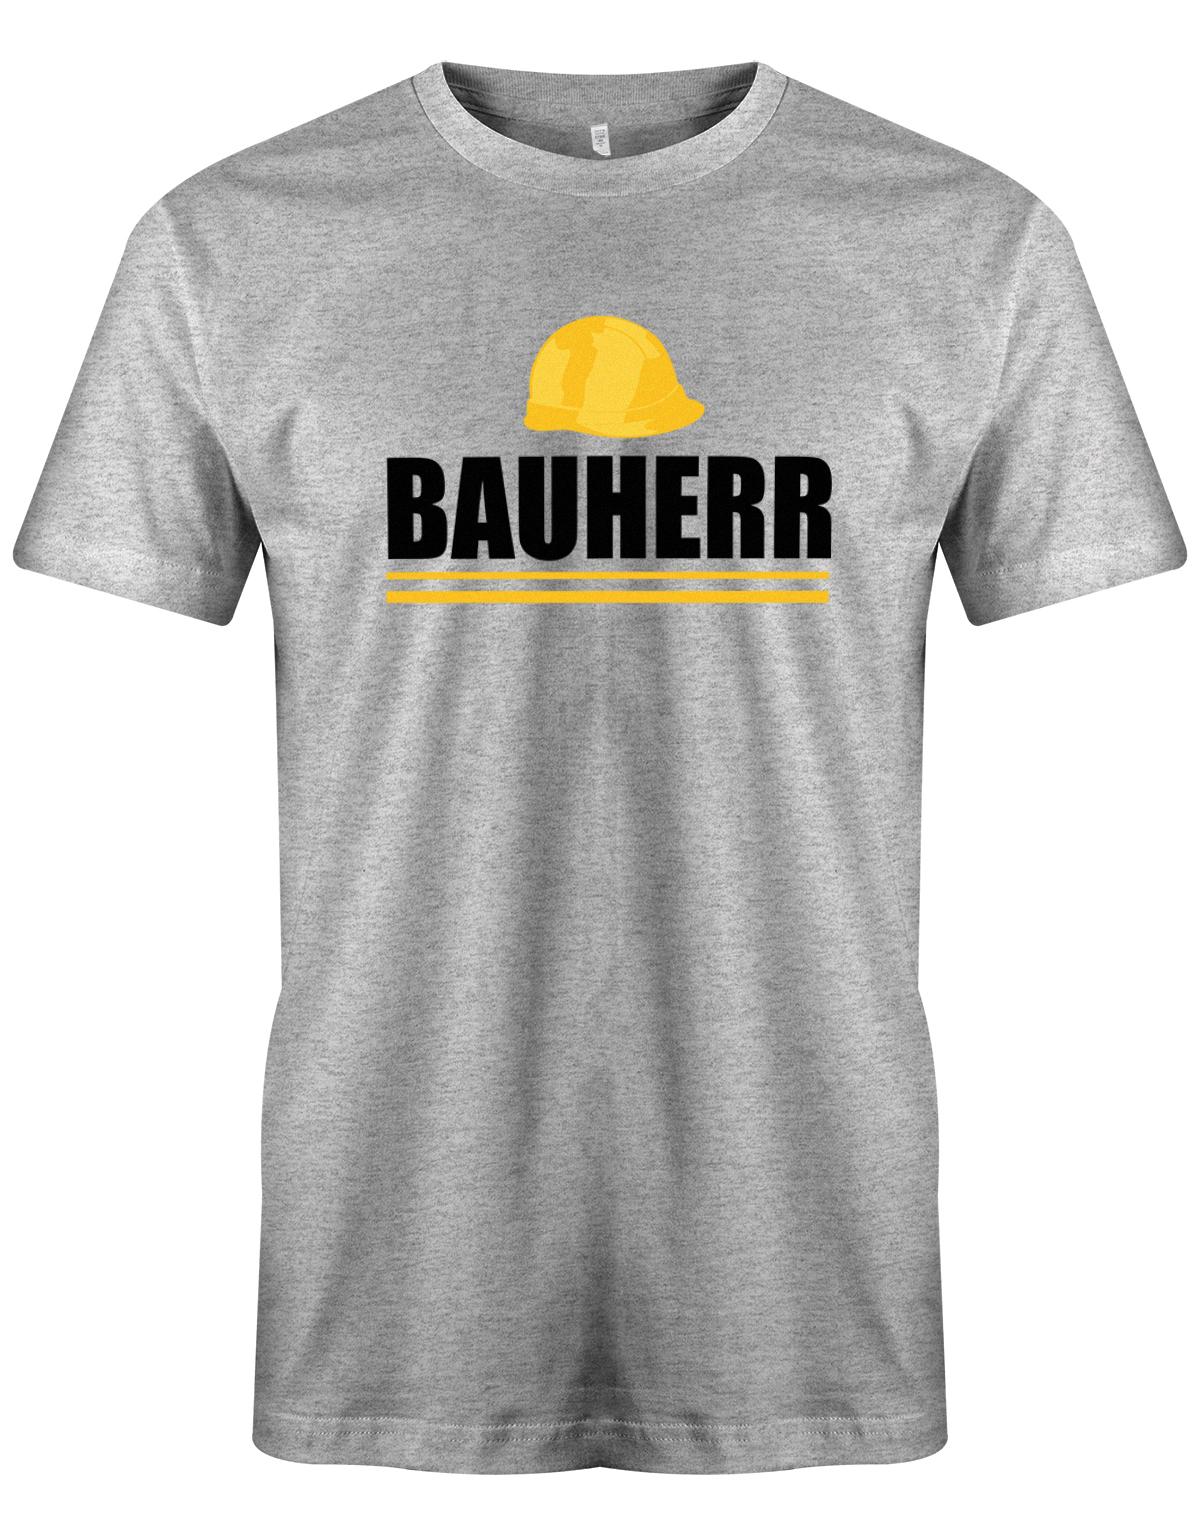 Bauherr-Bauhelm-Shirt-Herren-Grau